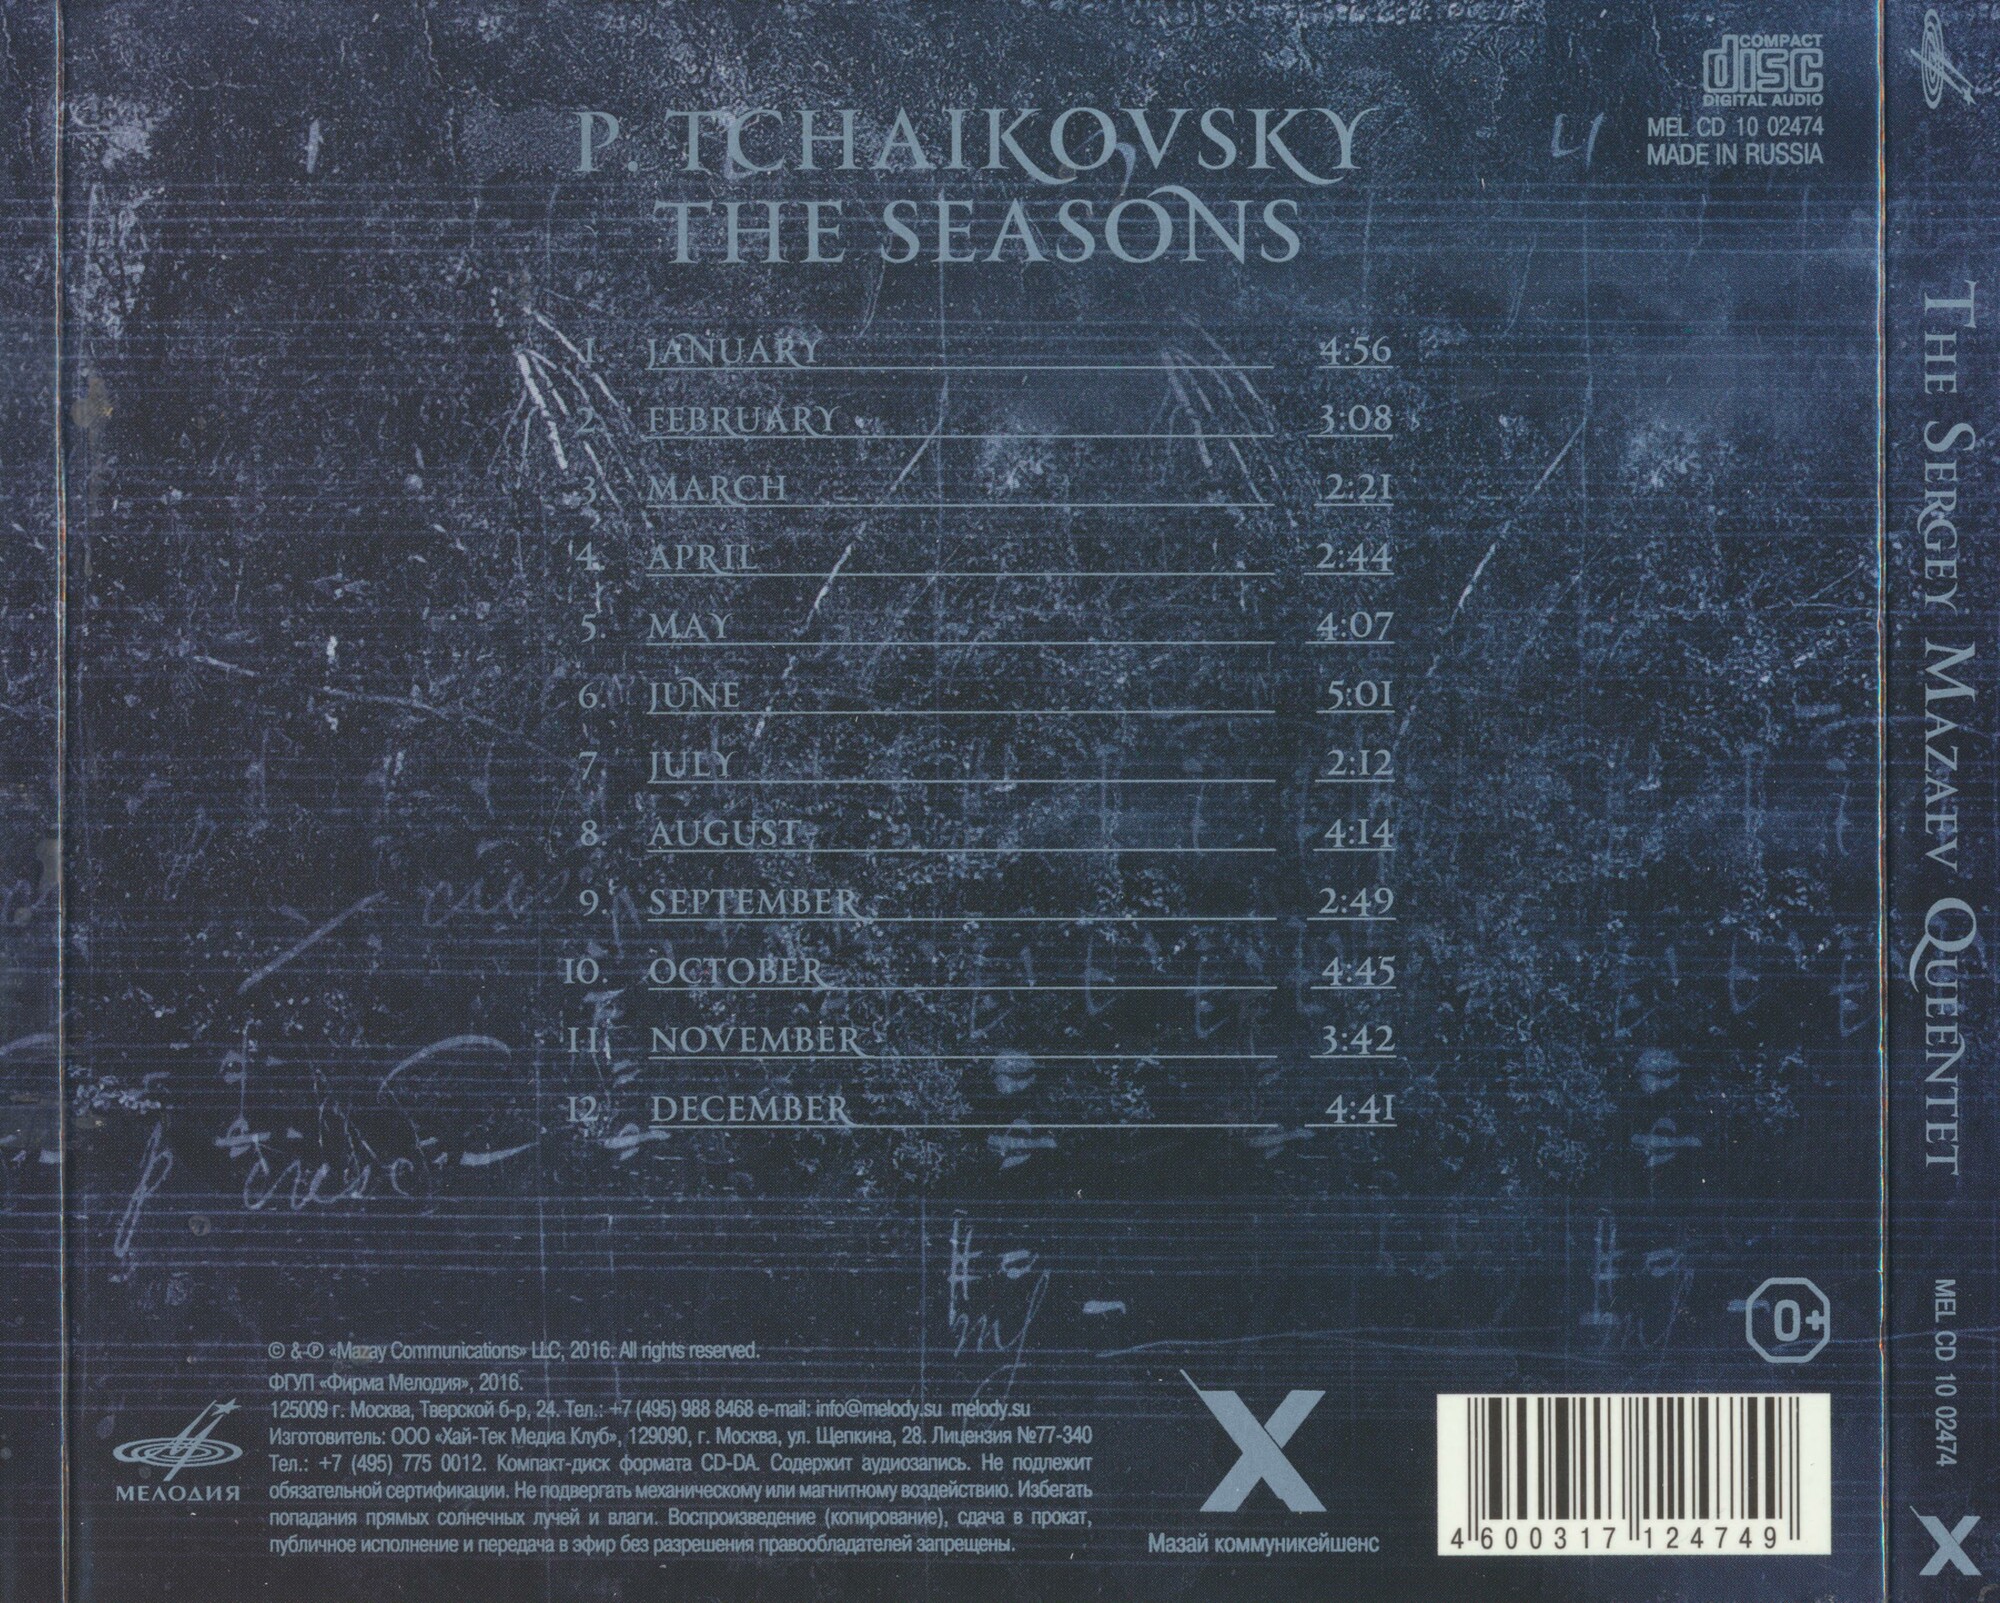 P. Tchaikovsky. The Seasons. The Sergey Mazaev Queentet